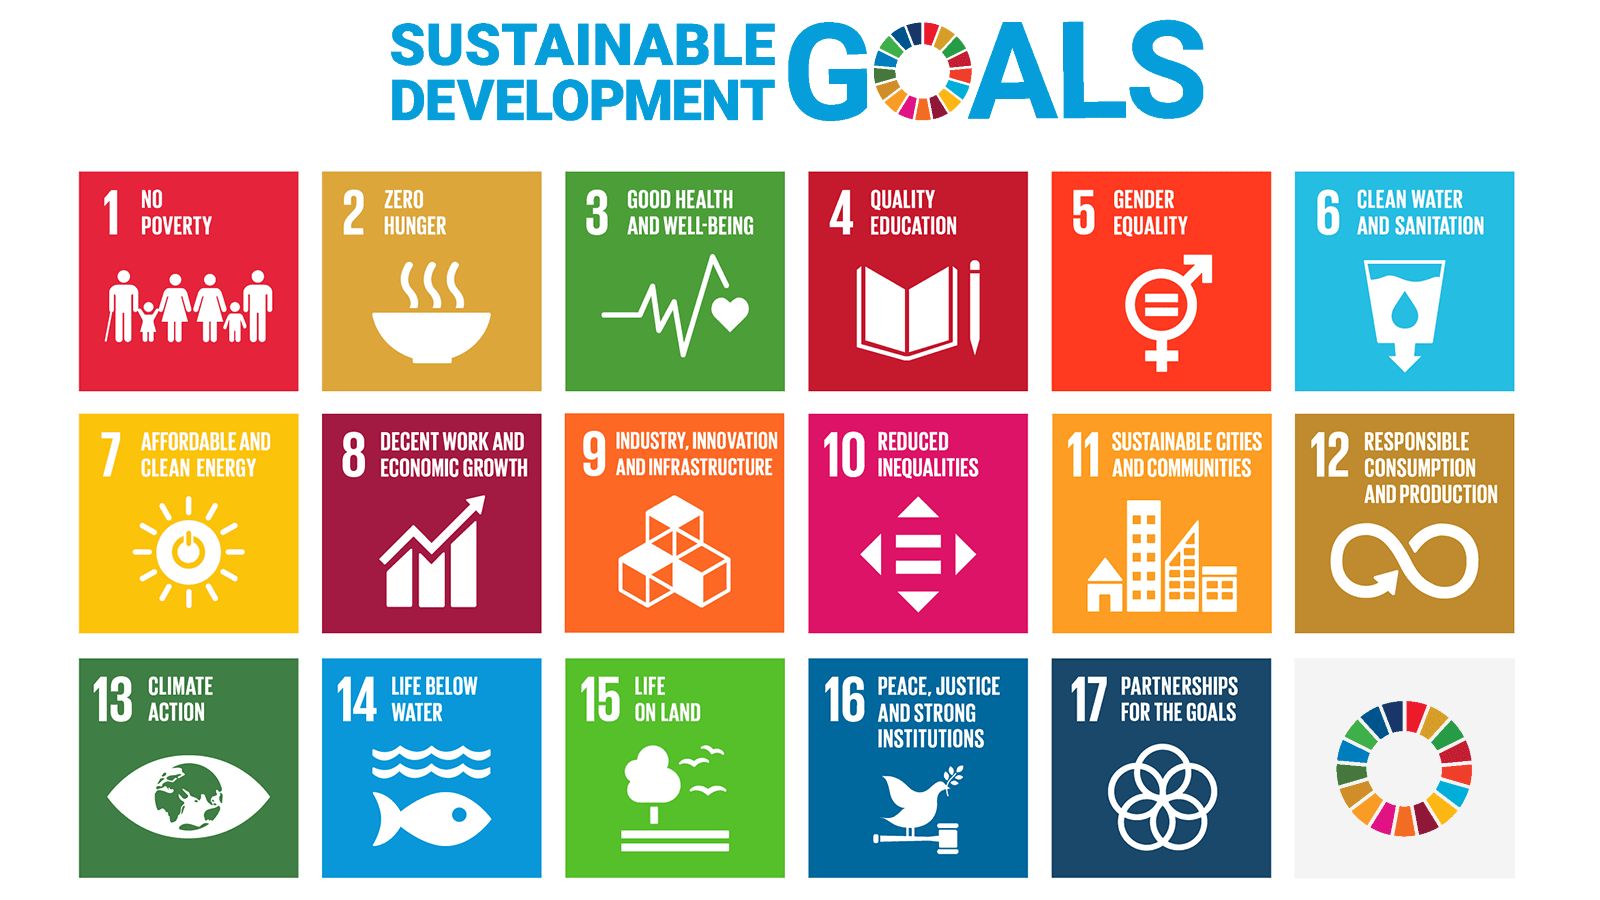 Image: SDGs (Sustainable Development Goals)